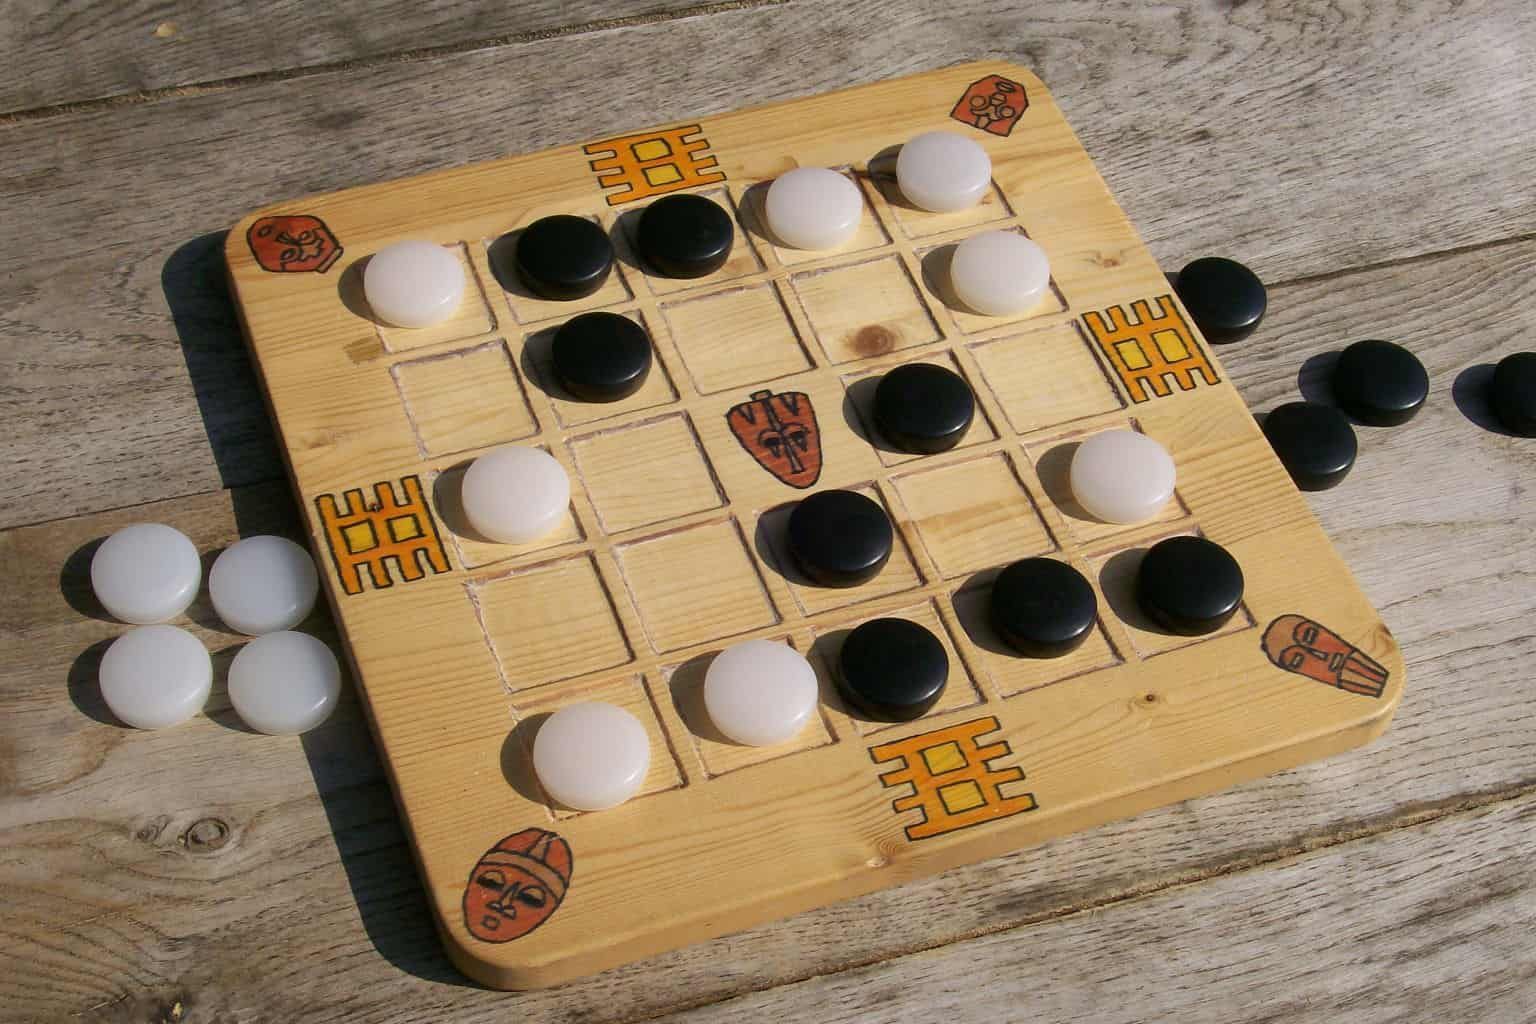 Jogos africanos de tabuleiro, como o Seega, podem ser utilizados na disciplina de matemática para trabalhar o raciocínio lógico, por exemplo.